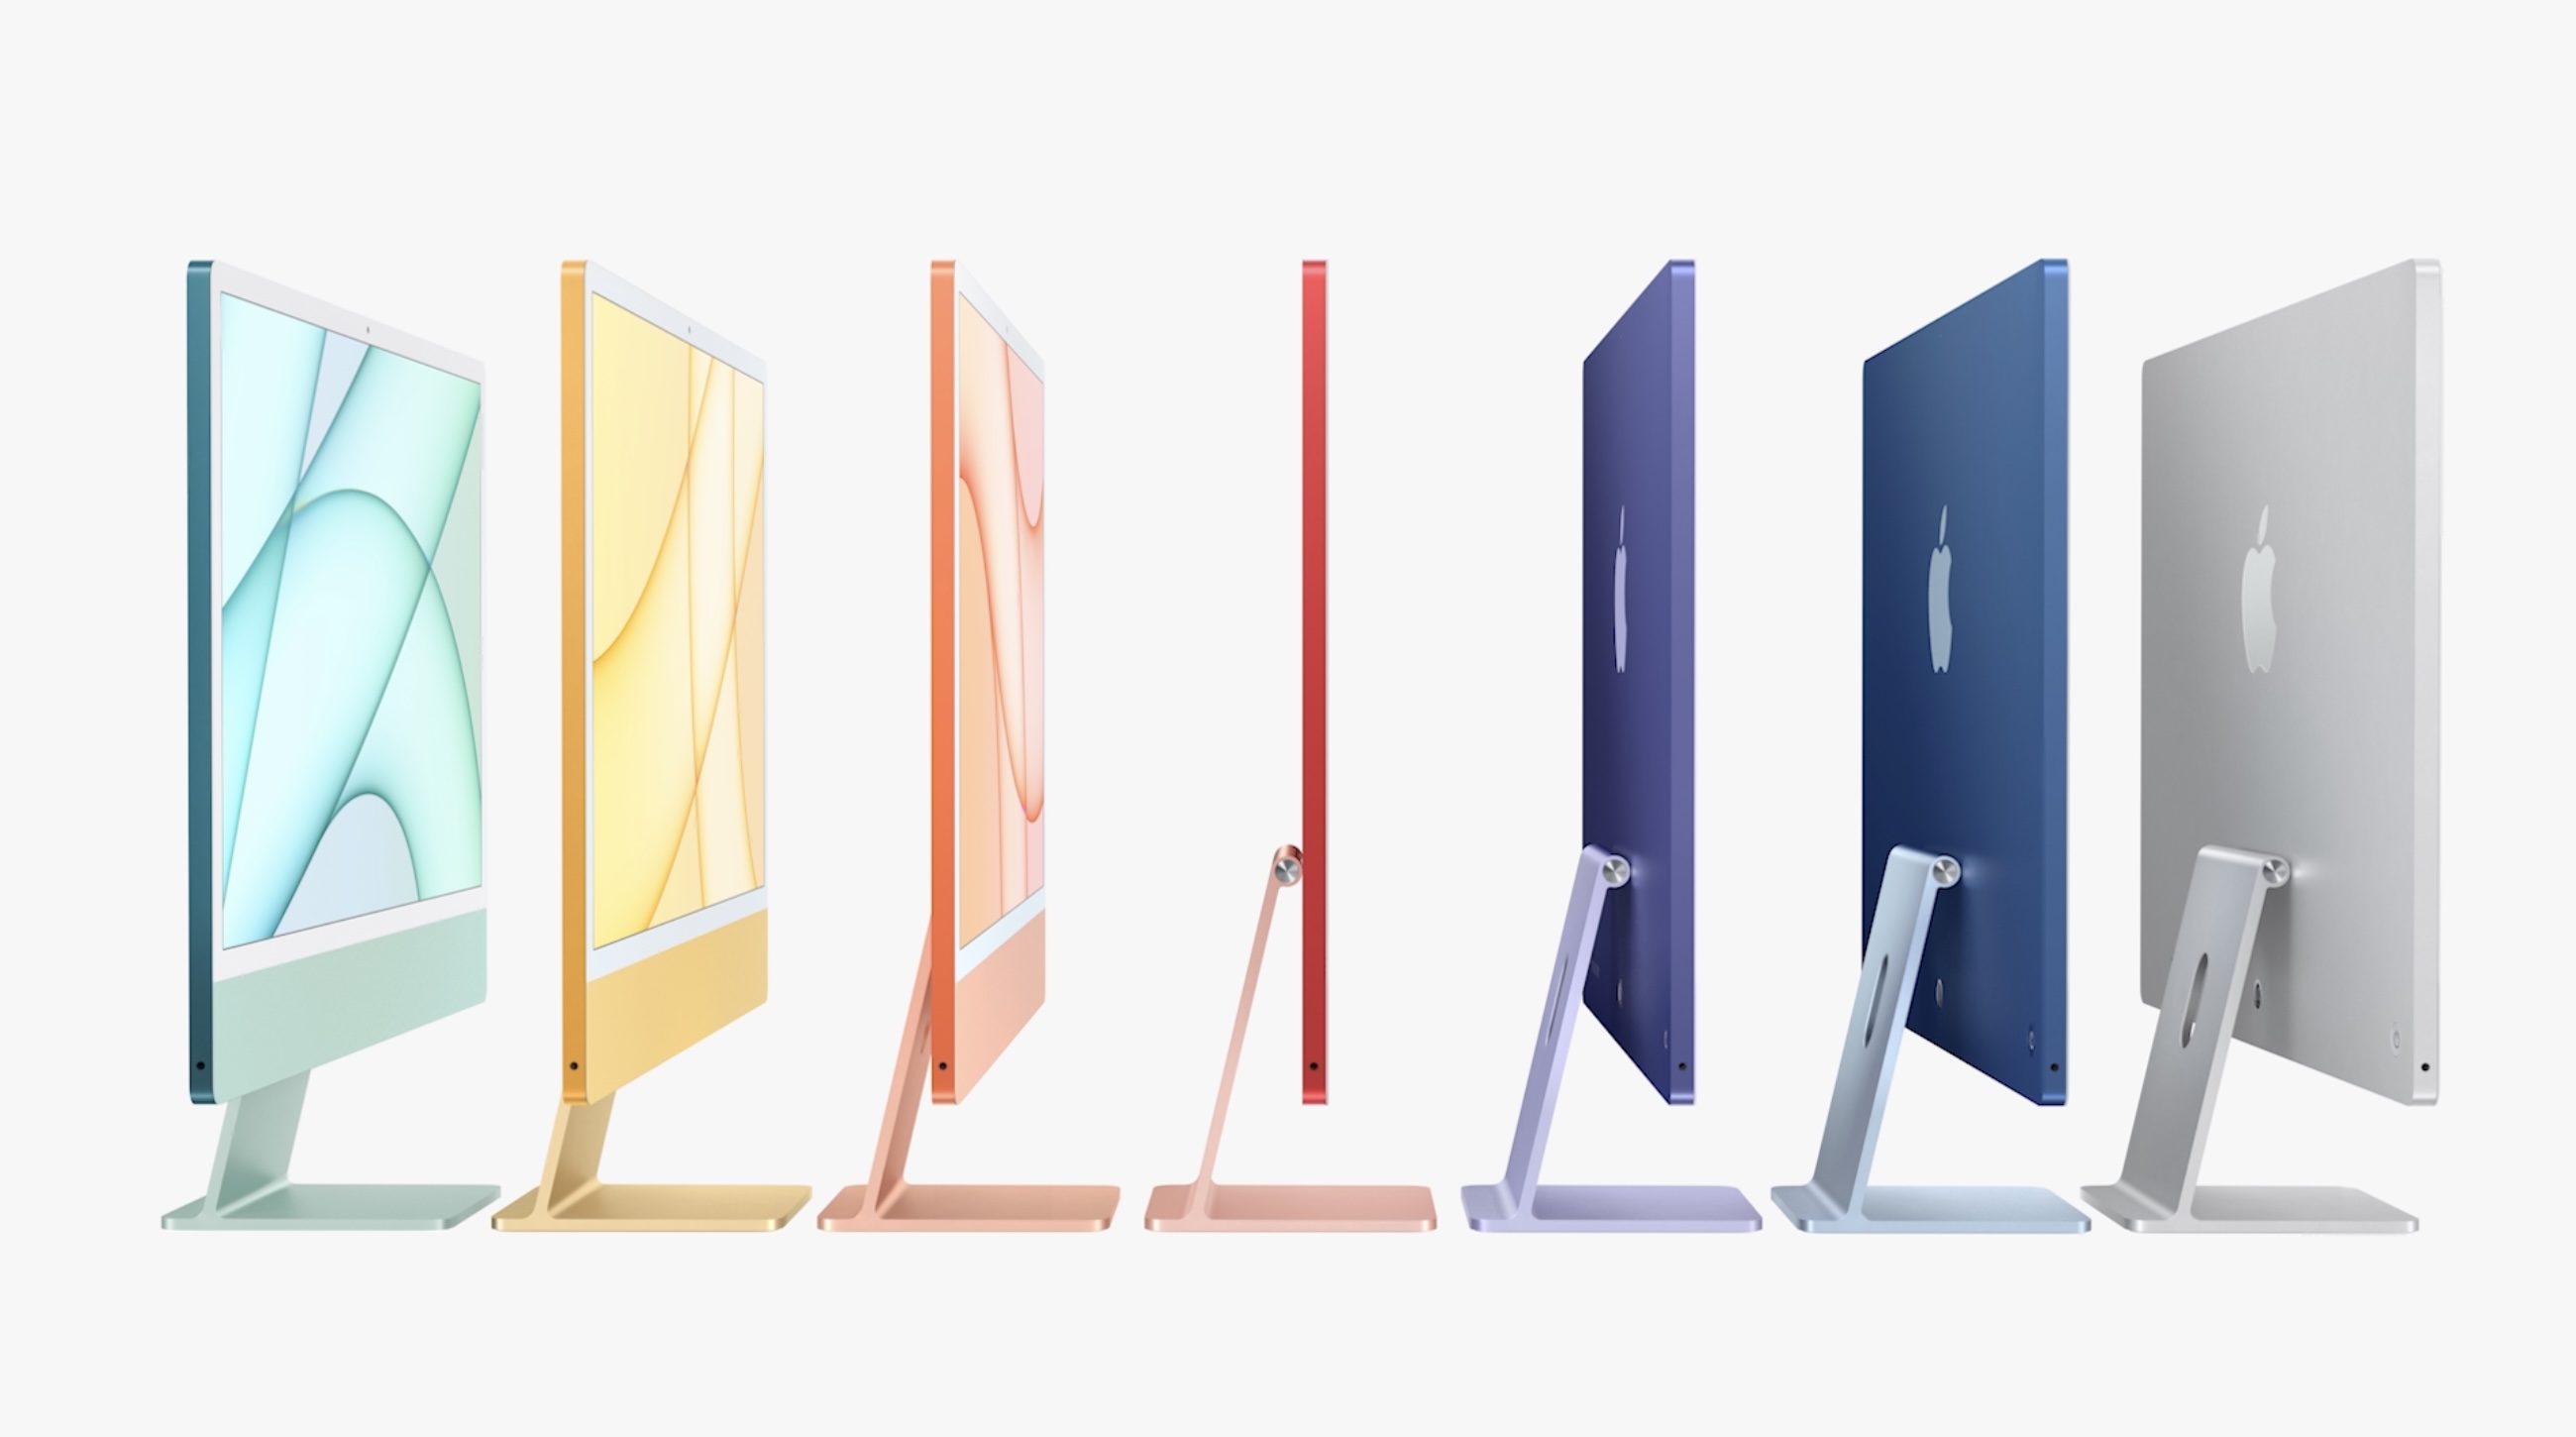 2021 M1 iMac colors